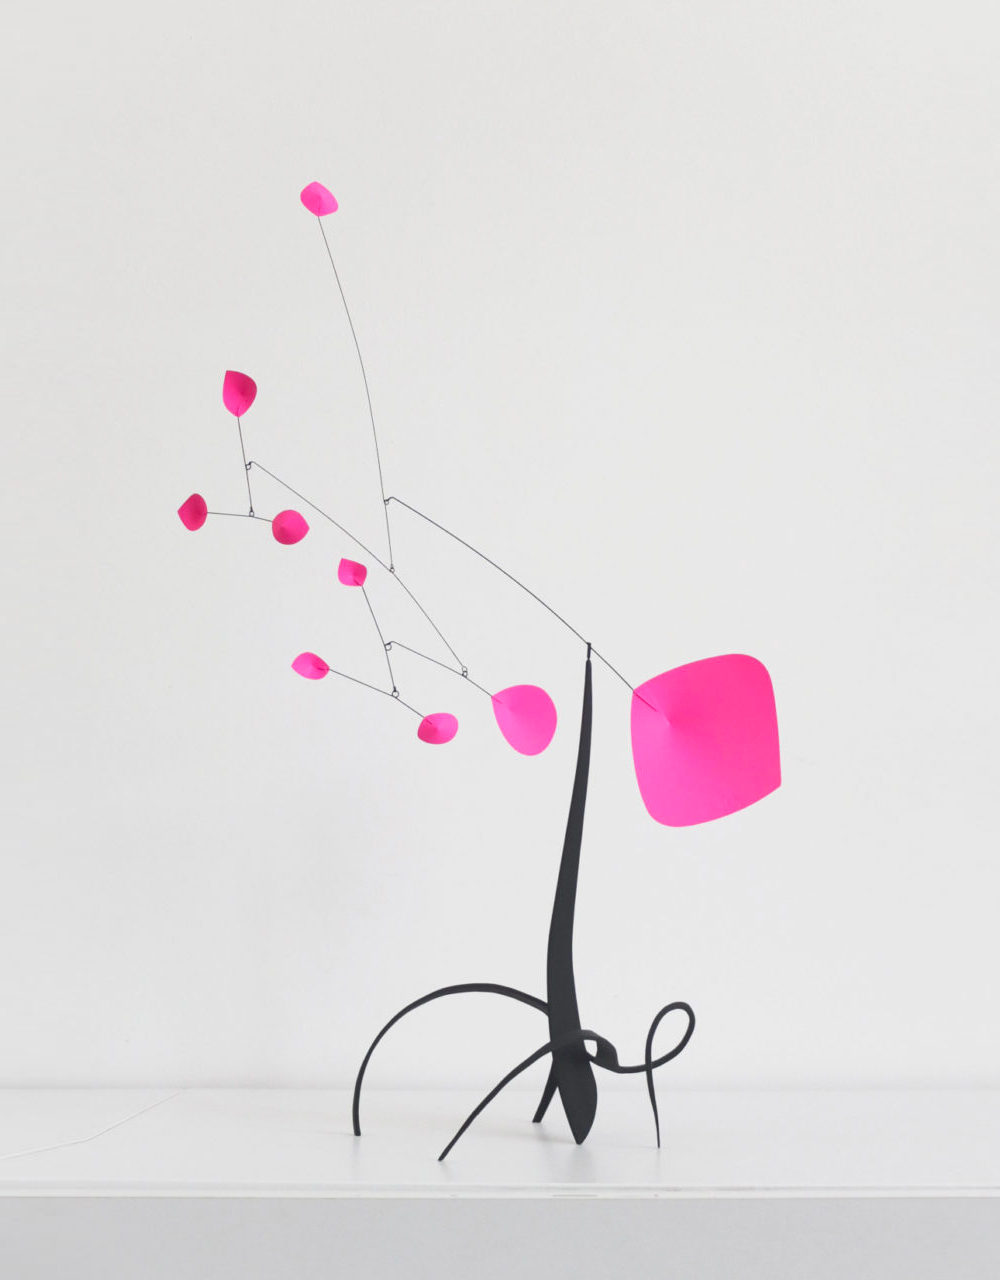 Alex Palenski stabile rose fluo sculpture métal mobile à poser